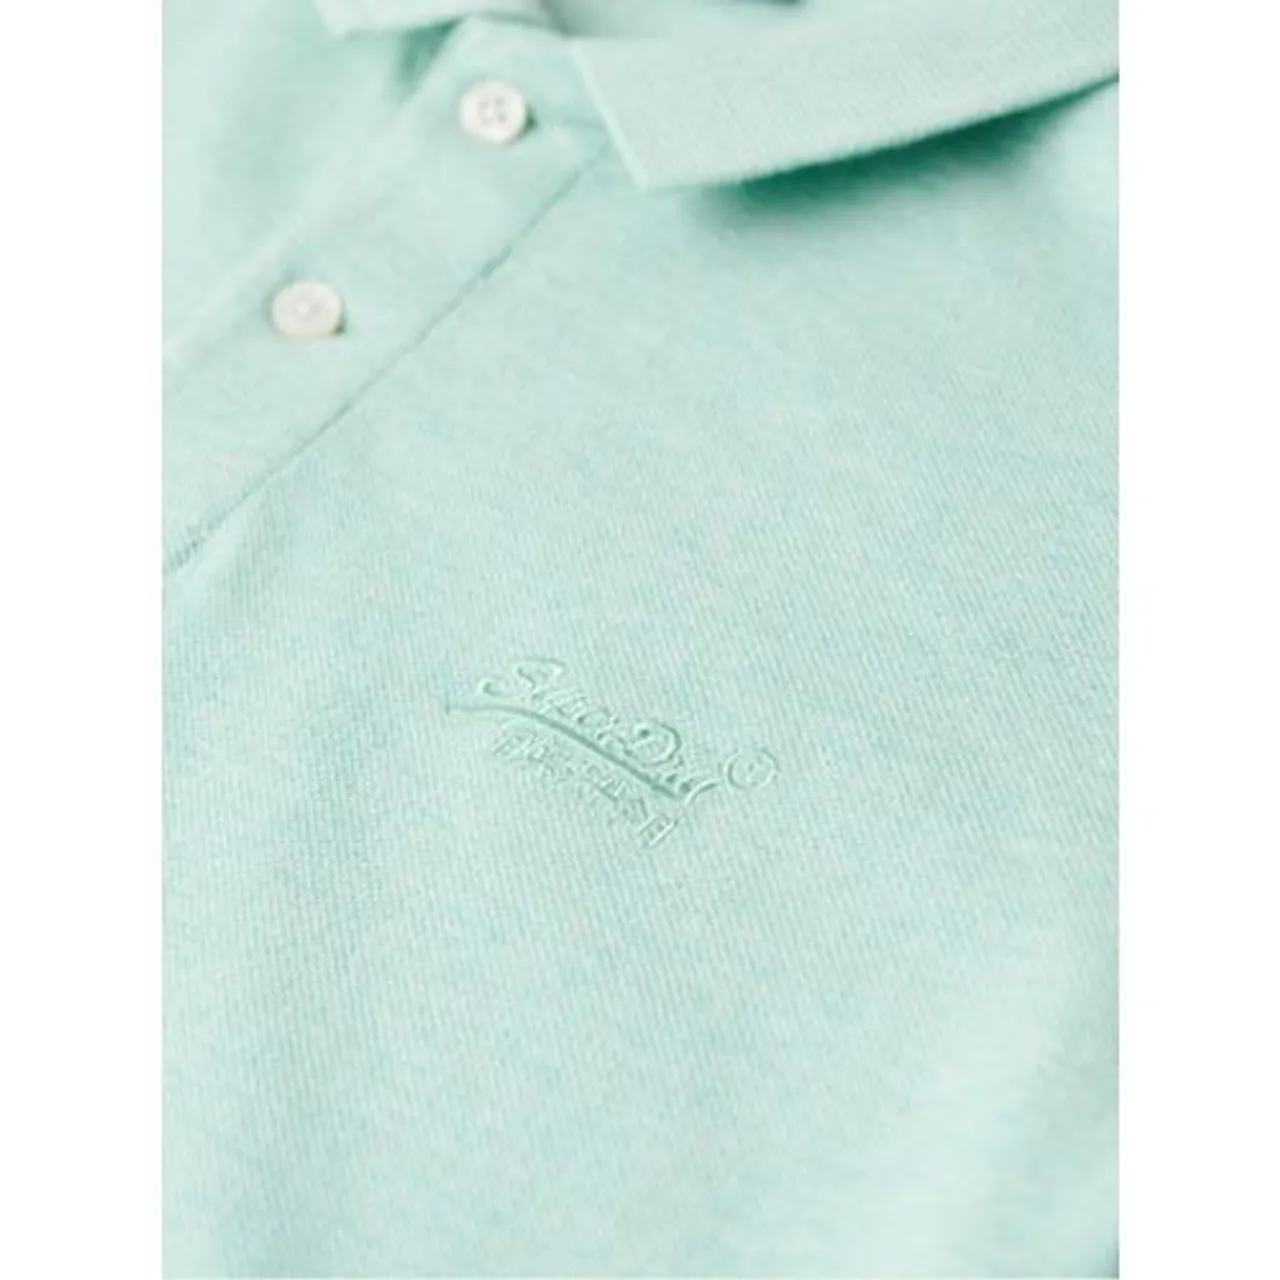 Superdry Mens Light Mint Green Marl Classic Pique Polo Shirt